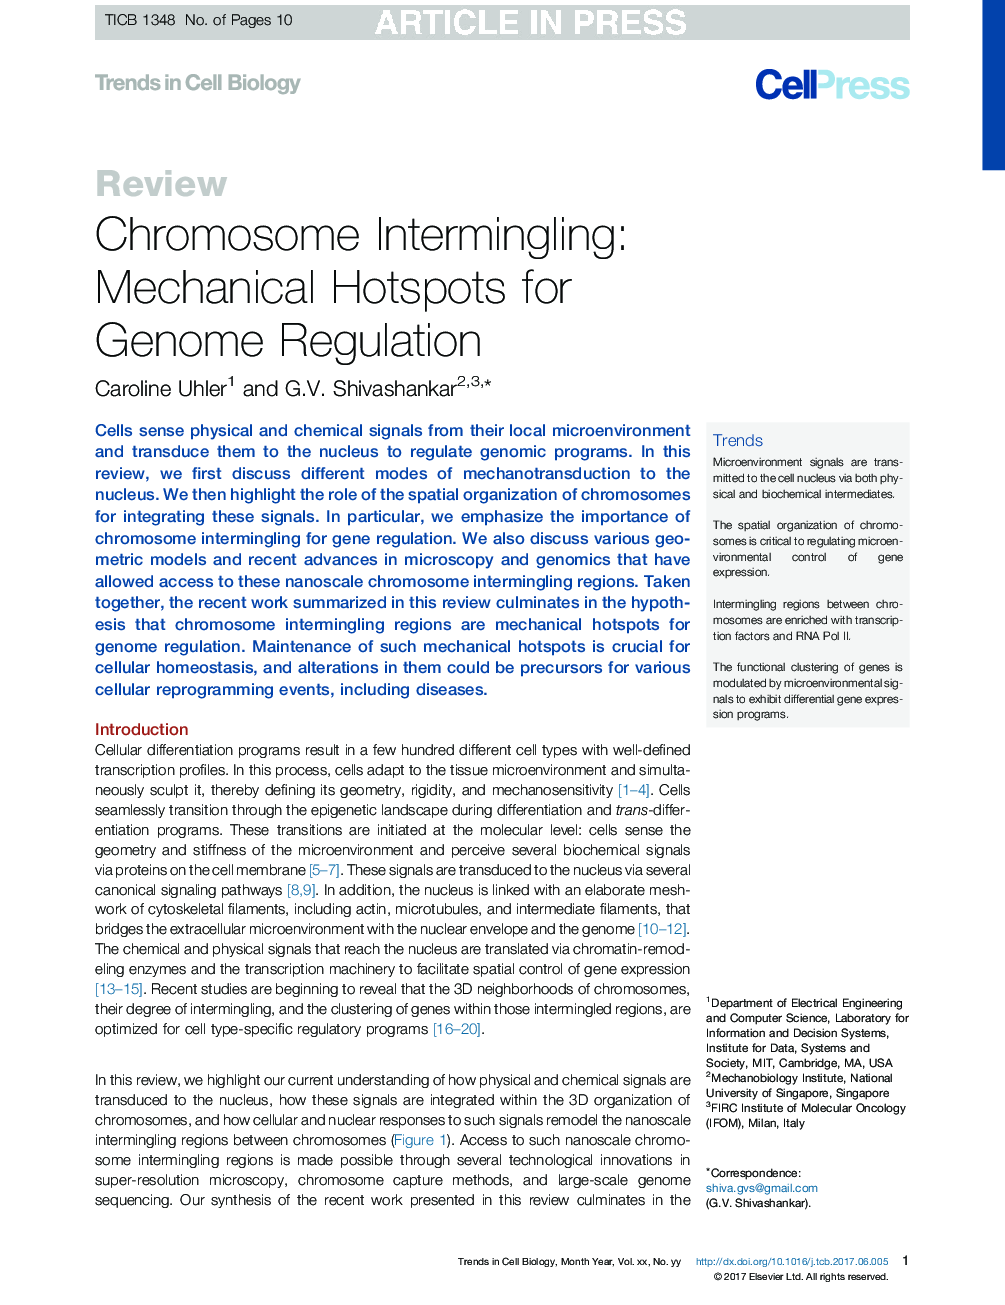 Chromosome Intermingling: Mechanical Hotspots for Genome Regulation